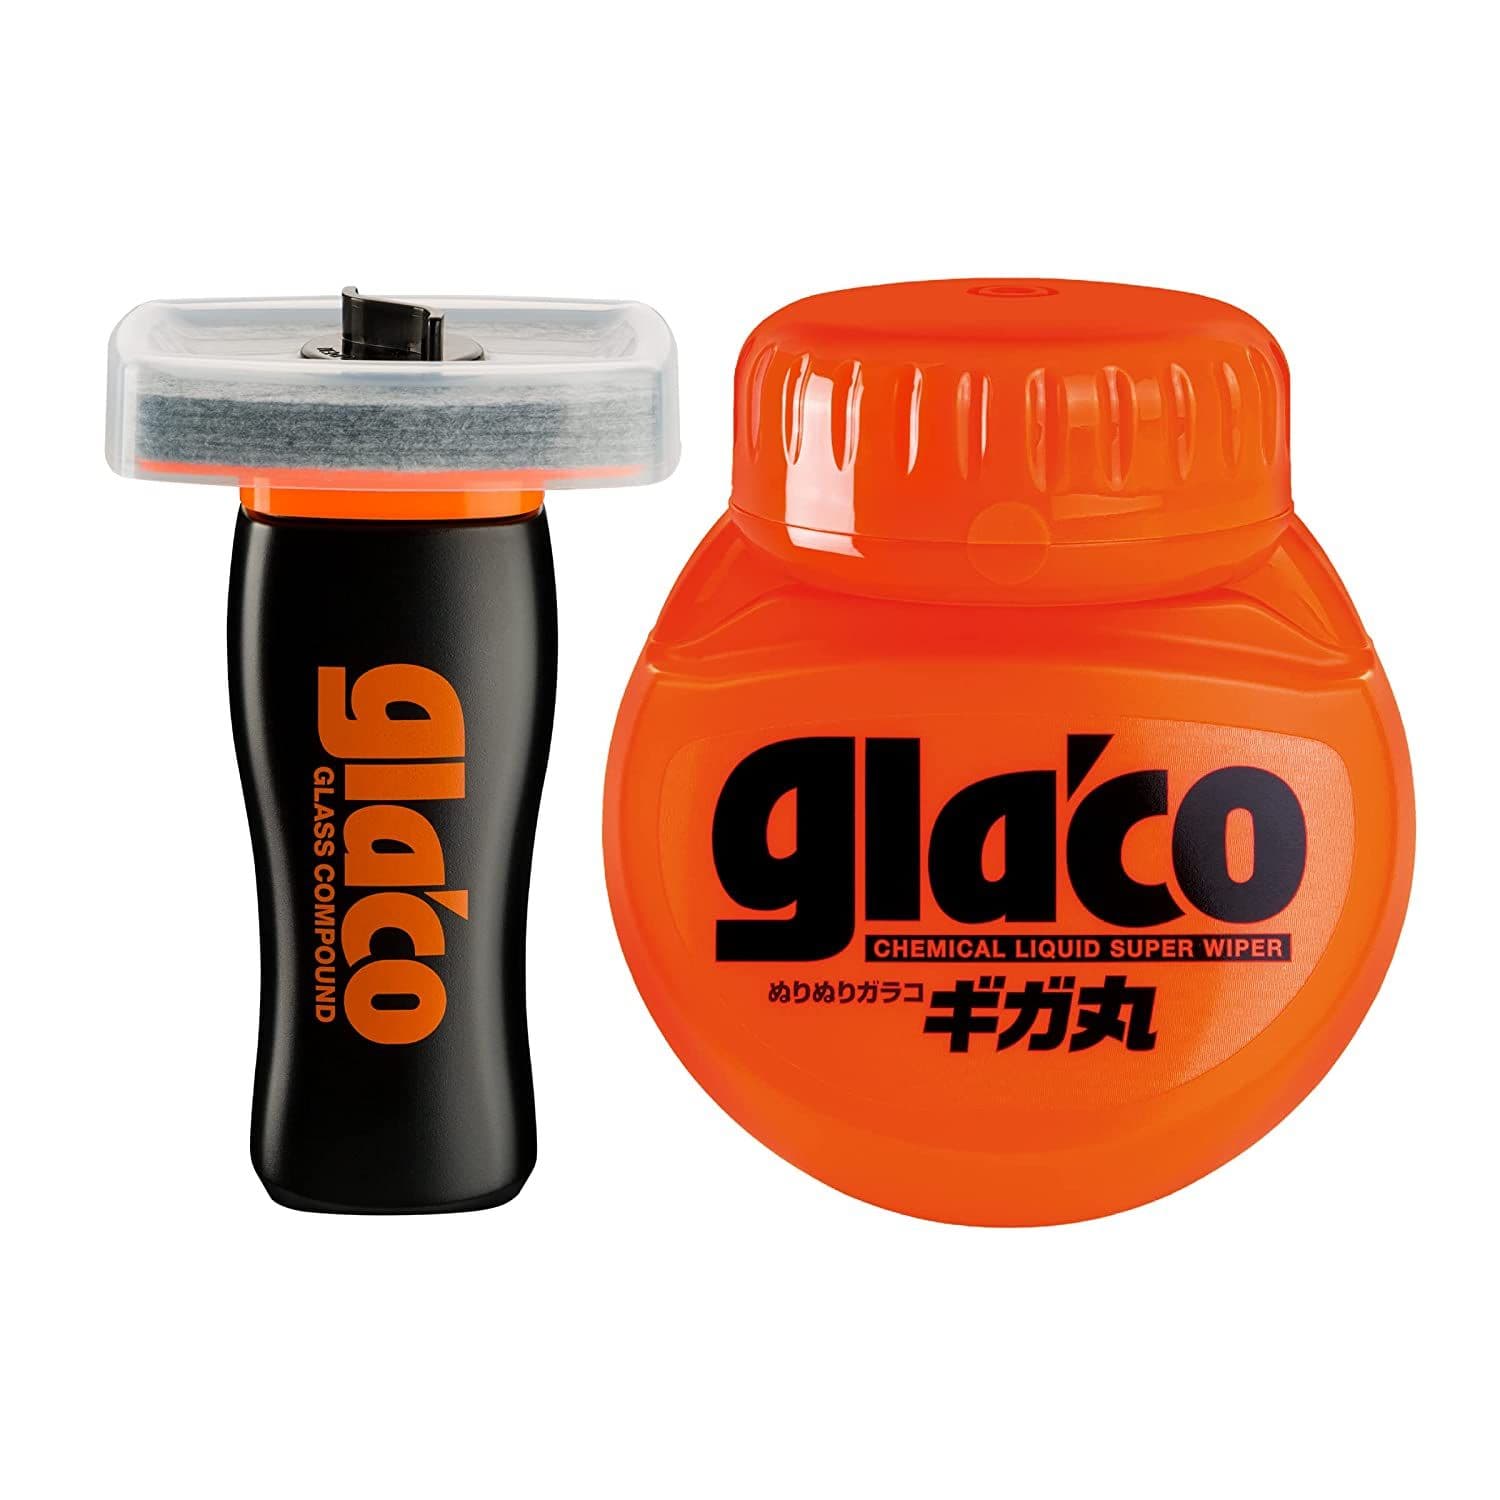 SOFT99 Ultra Glaco + Glaco Glass Compound Roll On